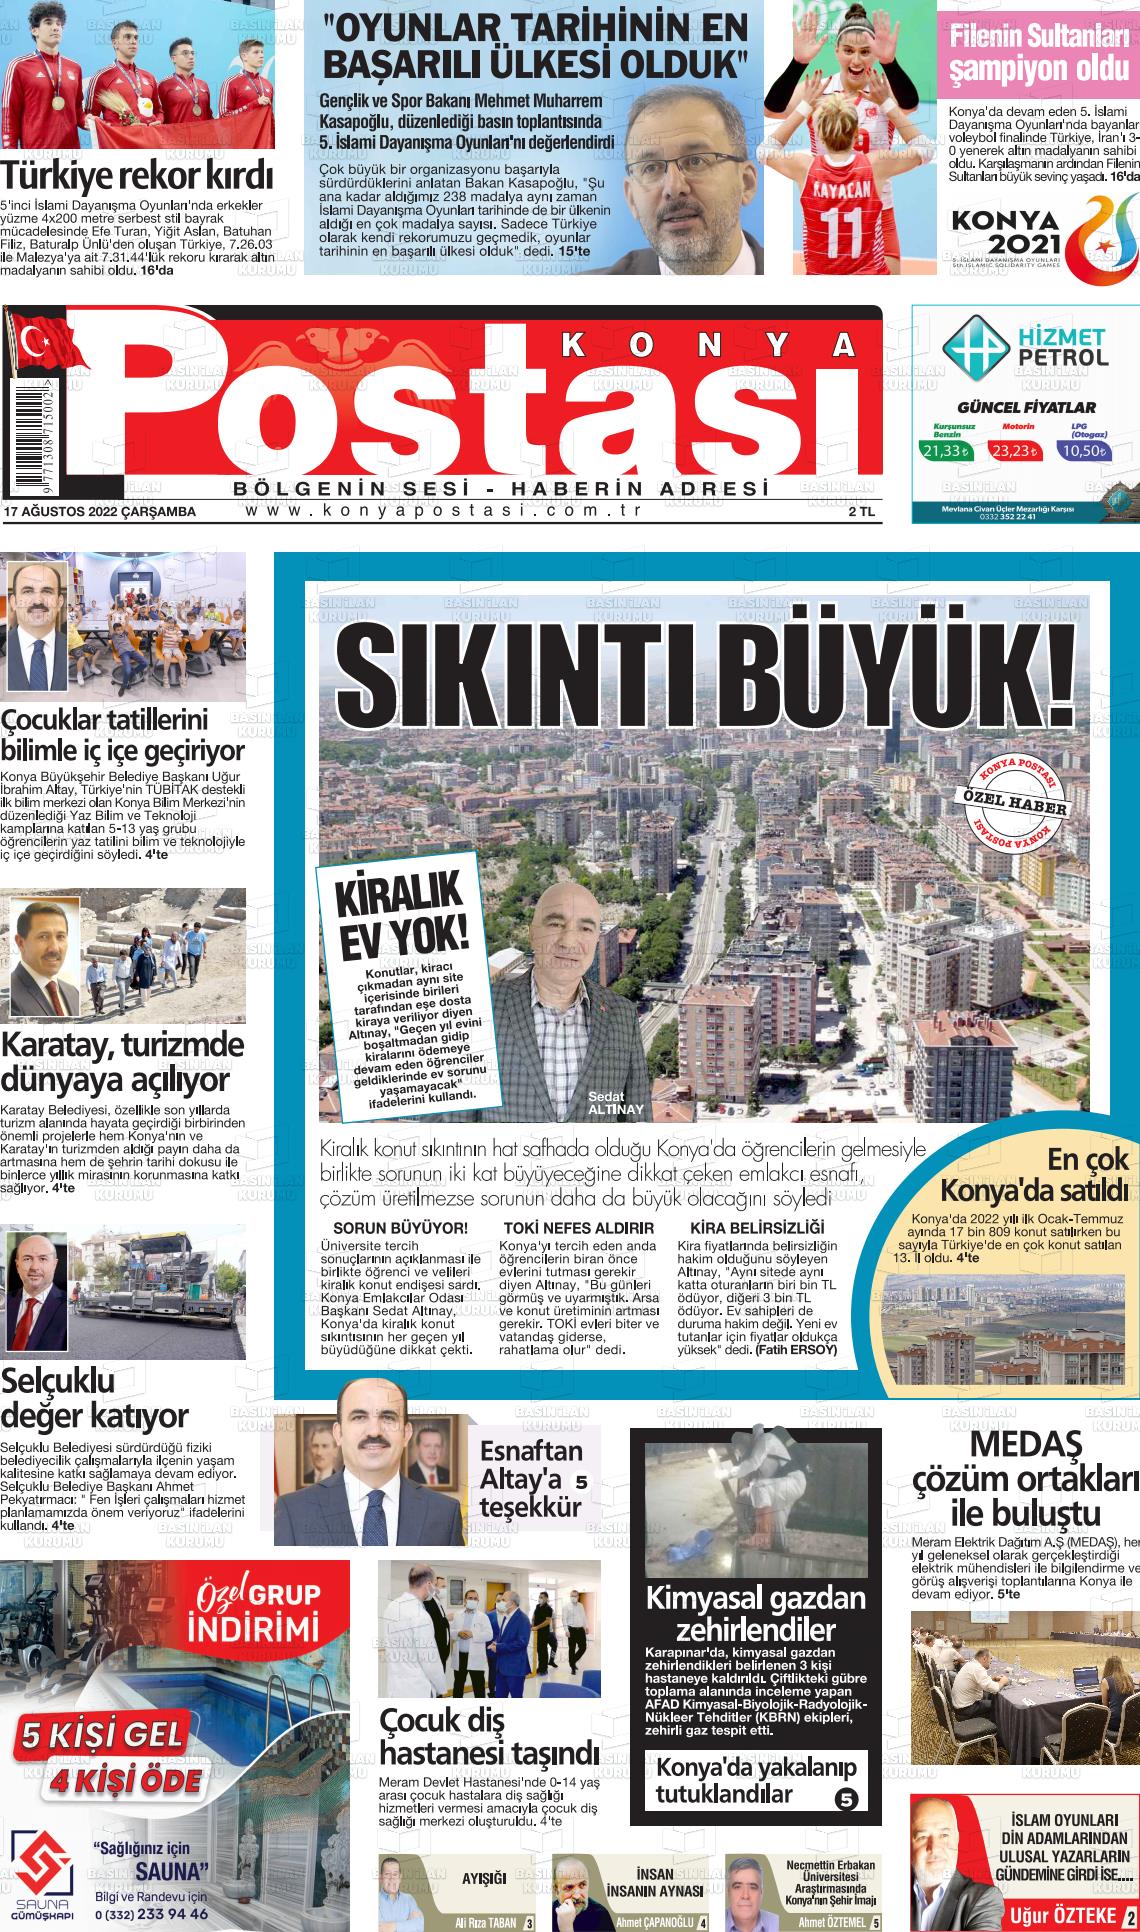 17 Ağustos 2022 Konya Postası Gazete Manşeti